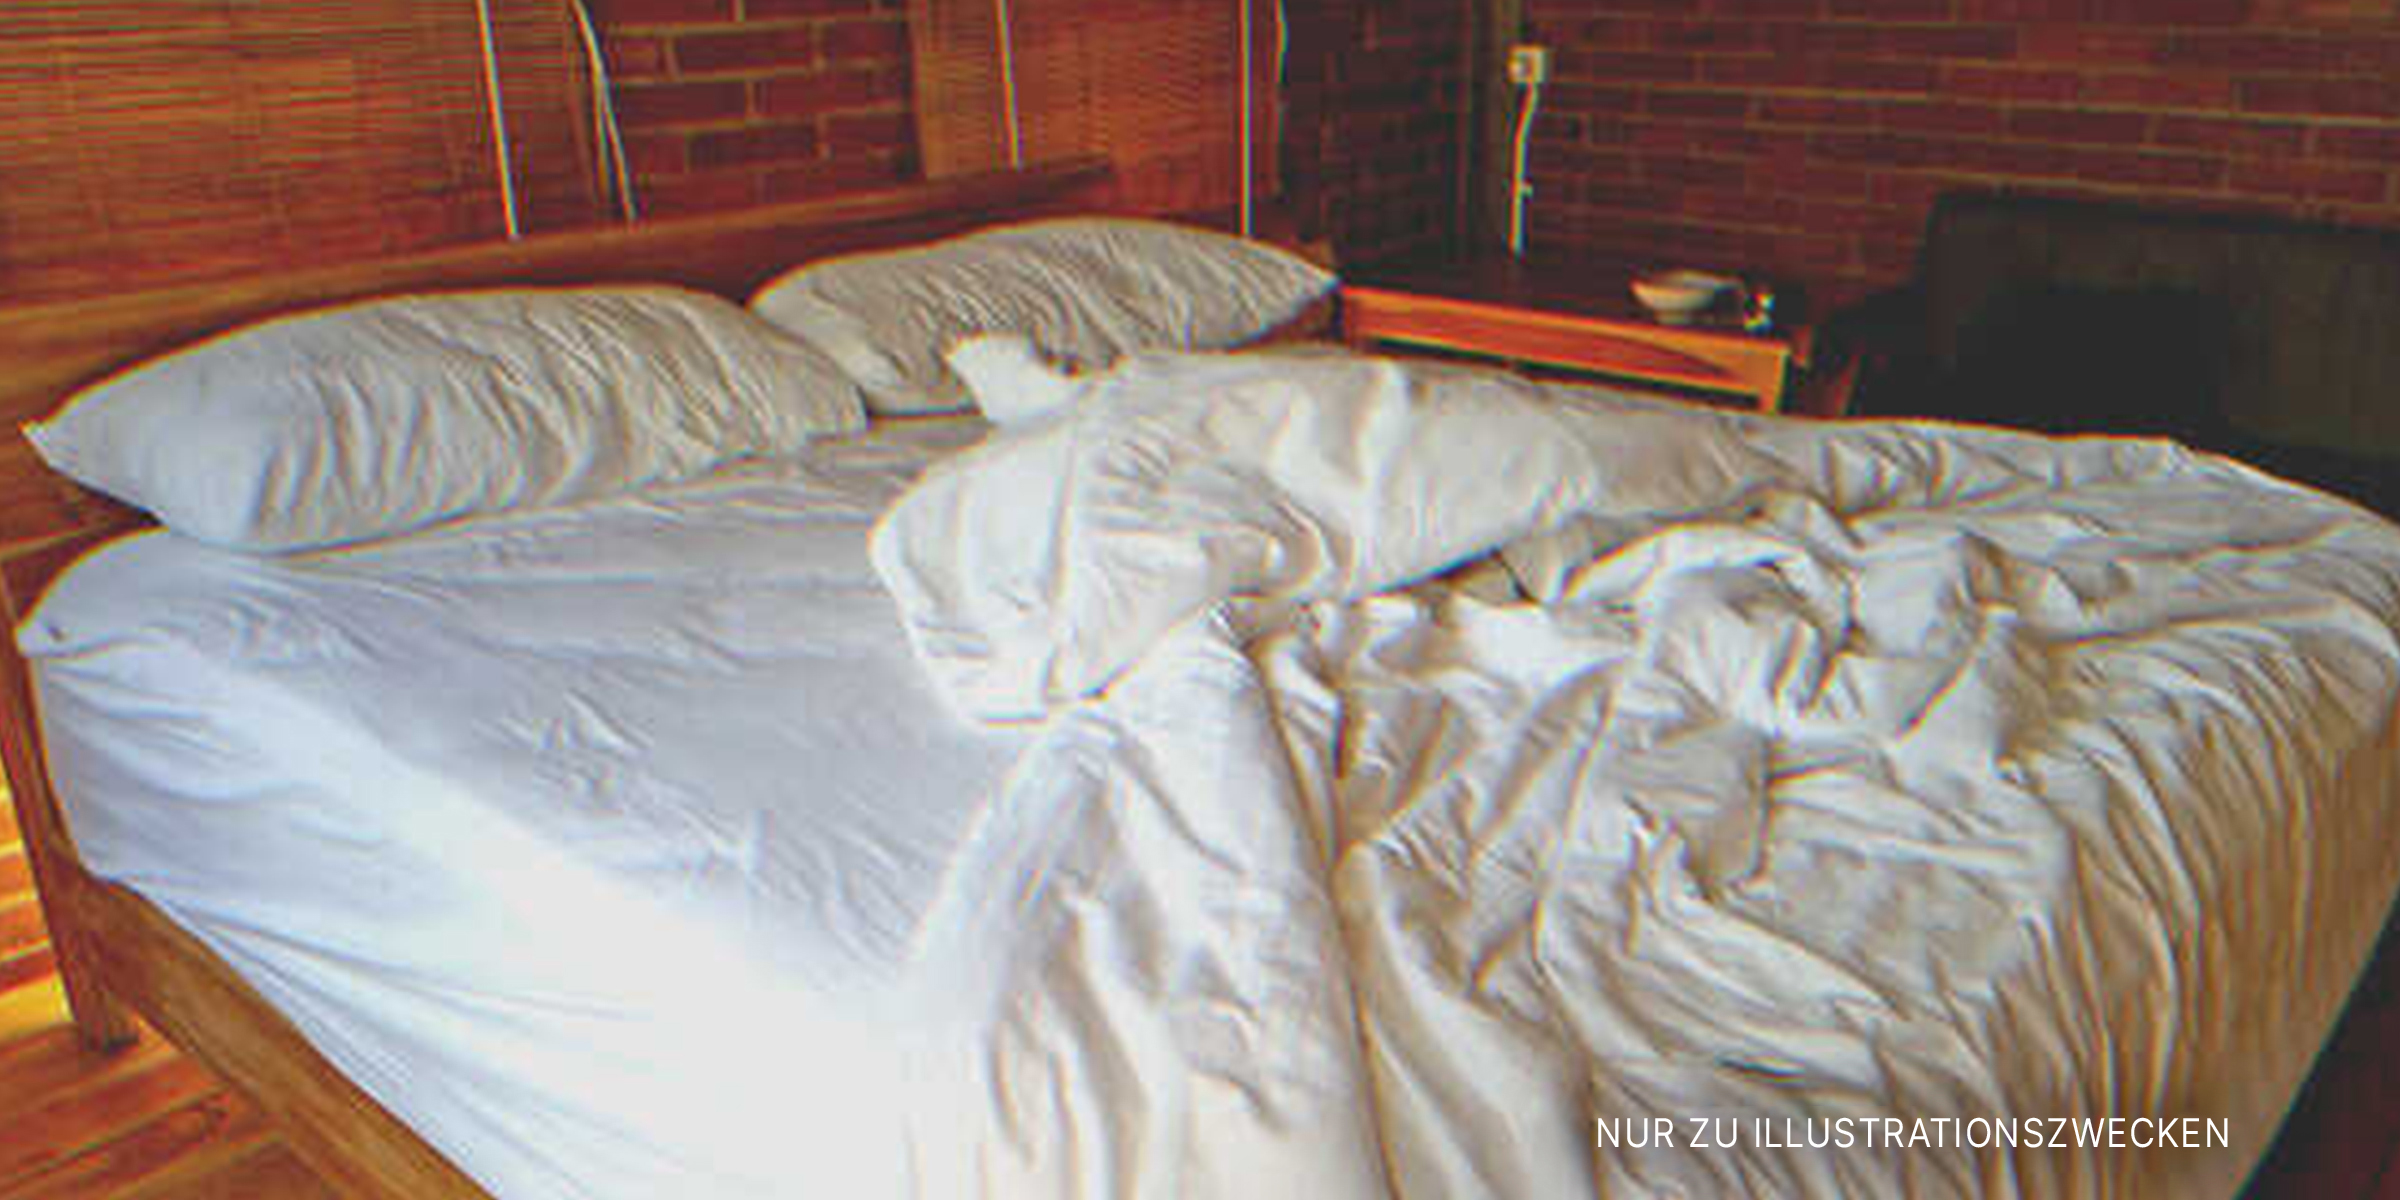 Leeres, ungemachtes Bett. | Quelle: Shutterstock